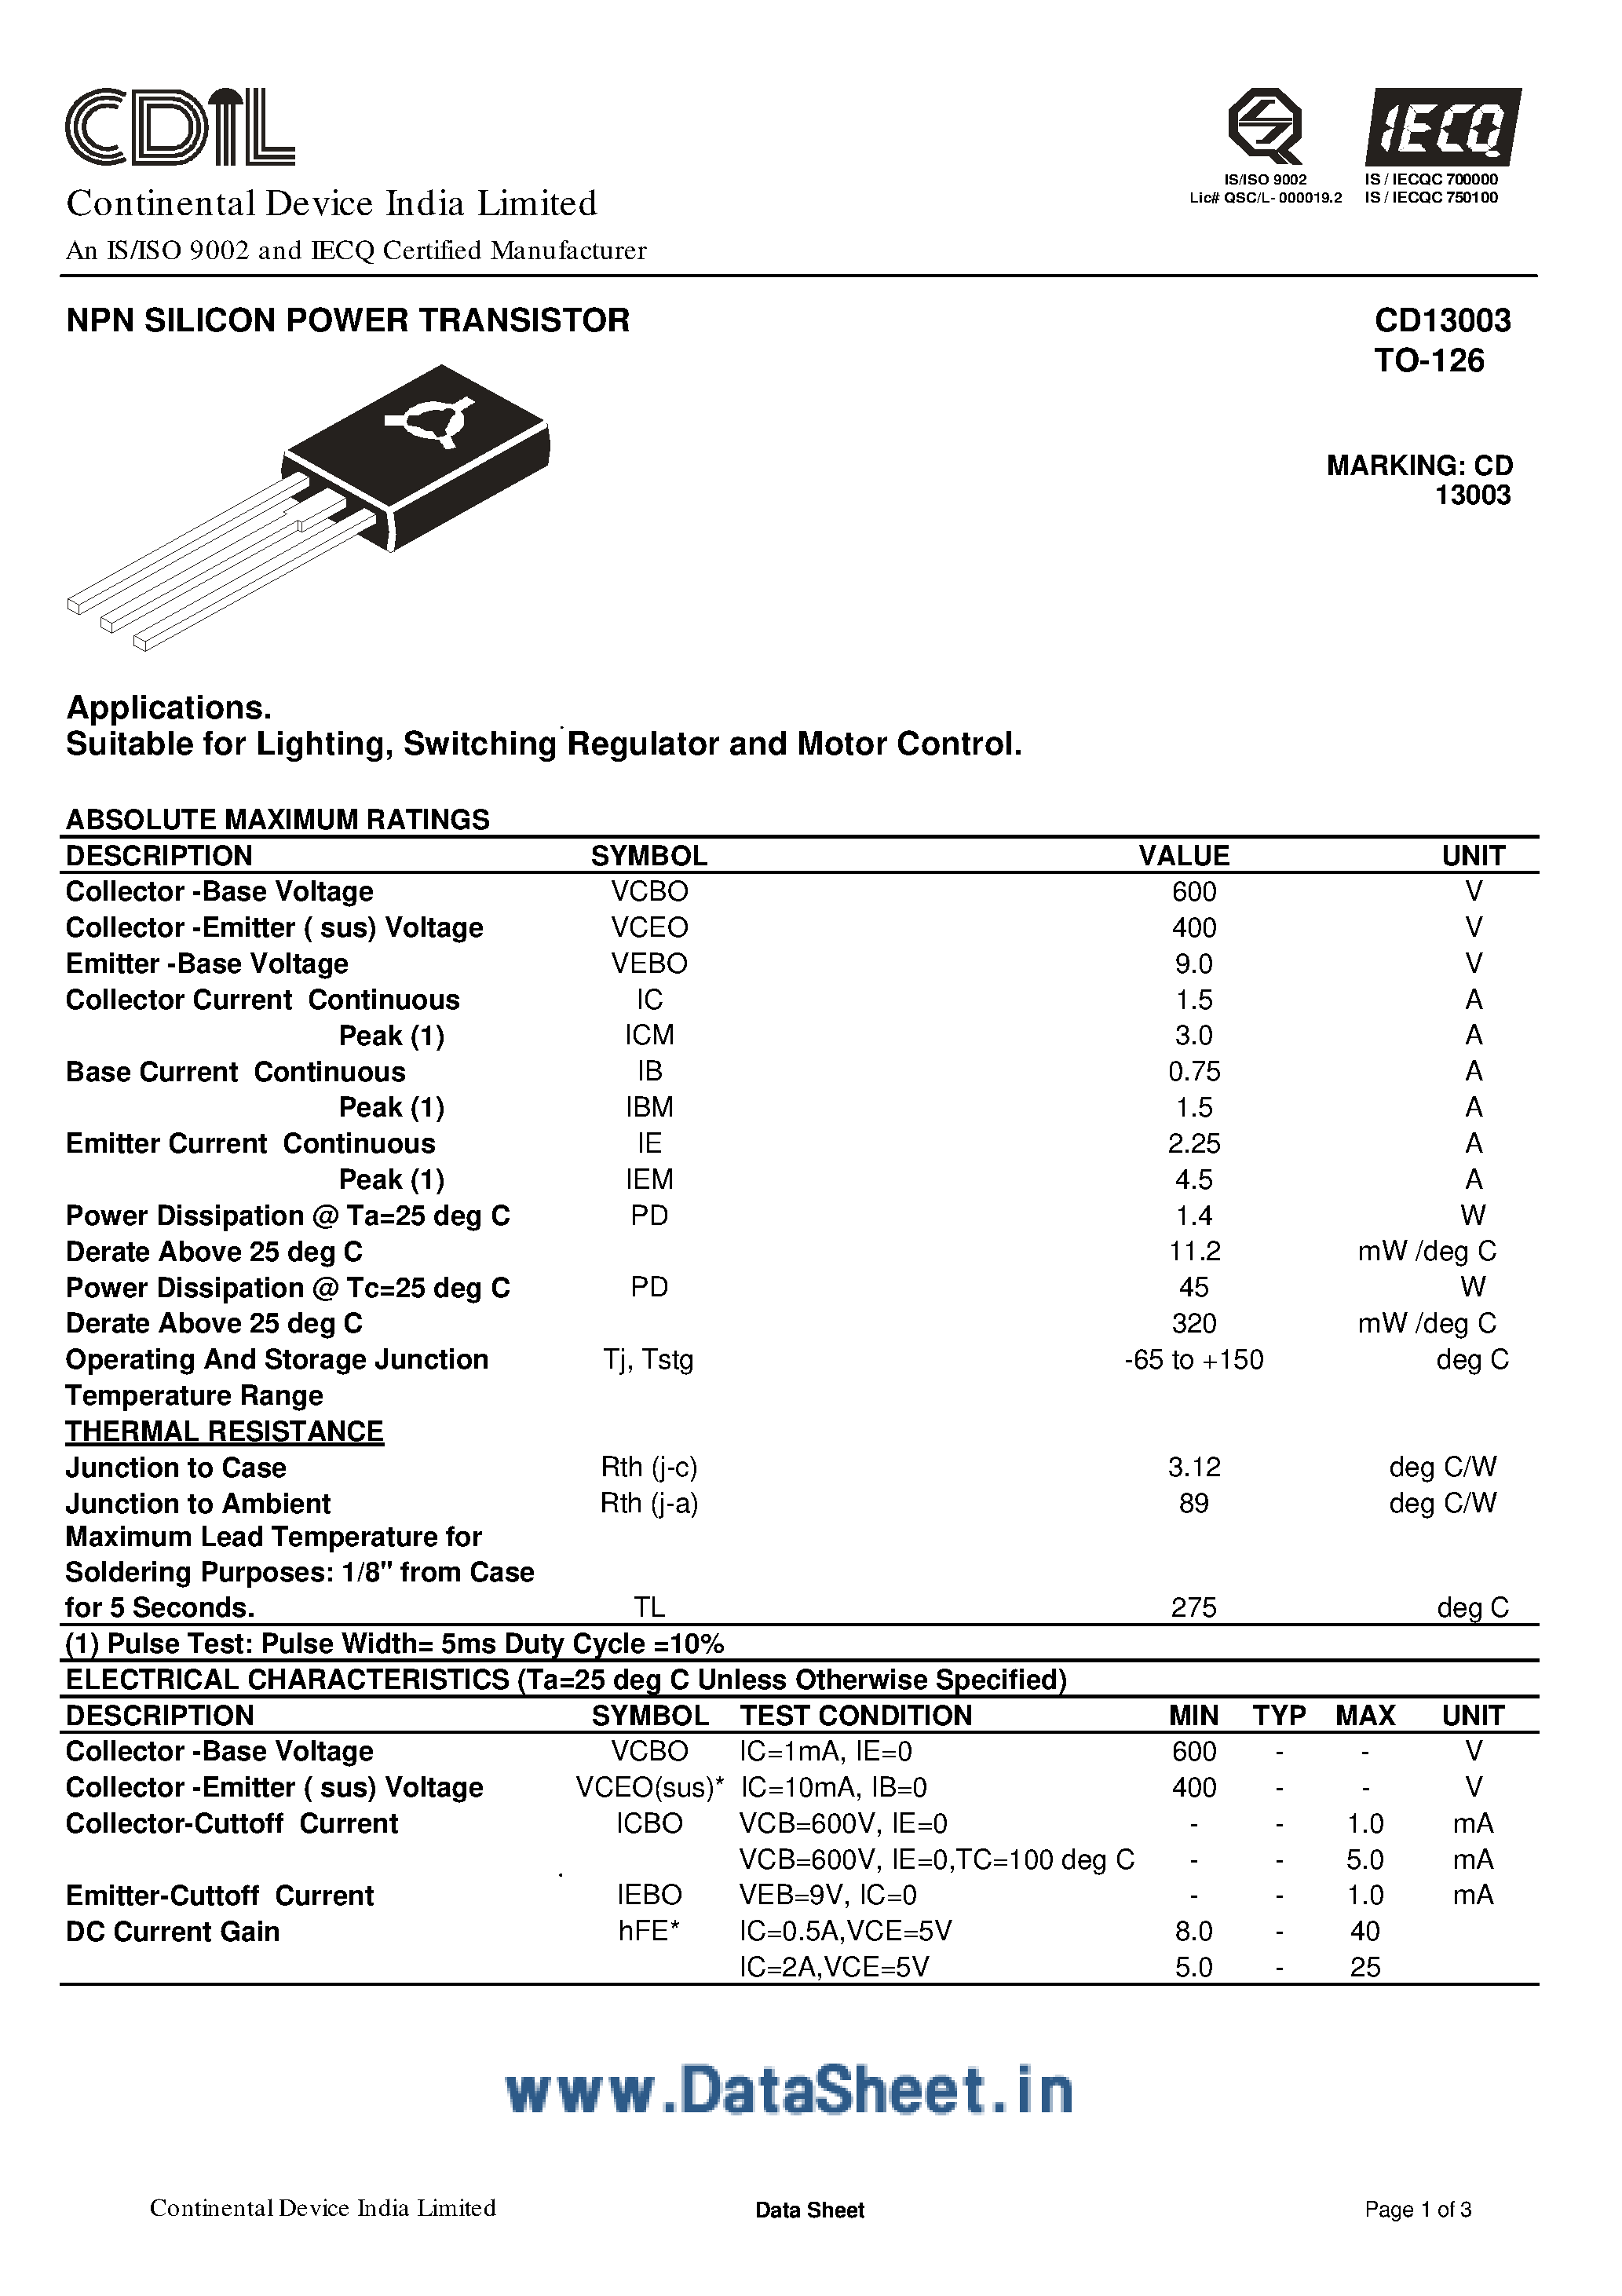 Datasheet CD13003 - NPN Silicon Power Transistor page 1